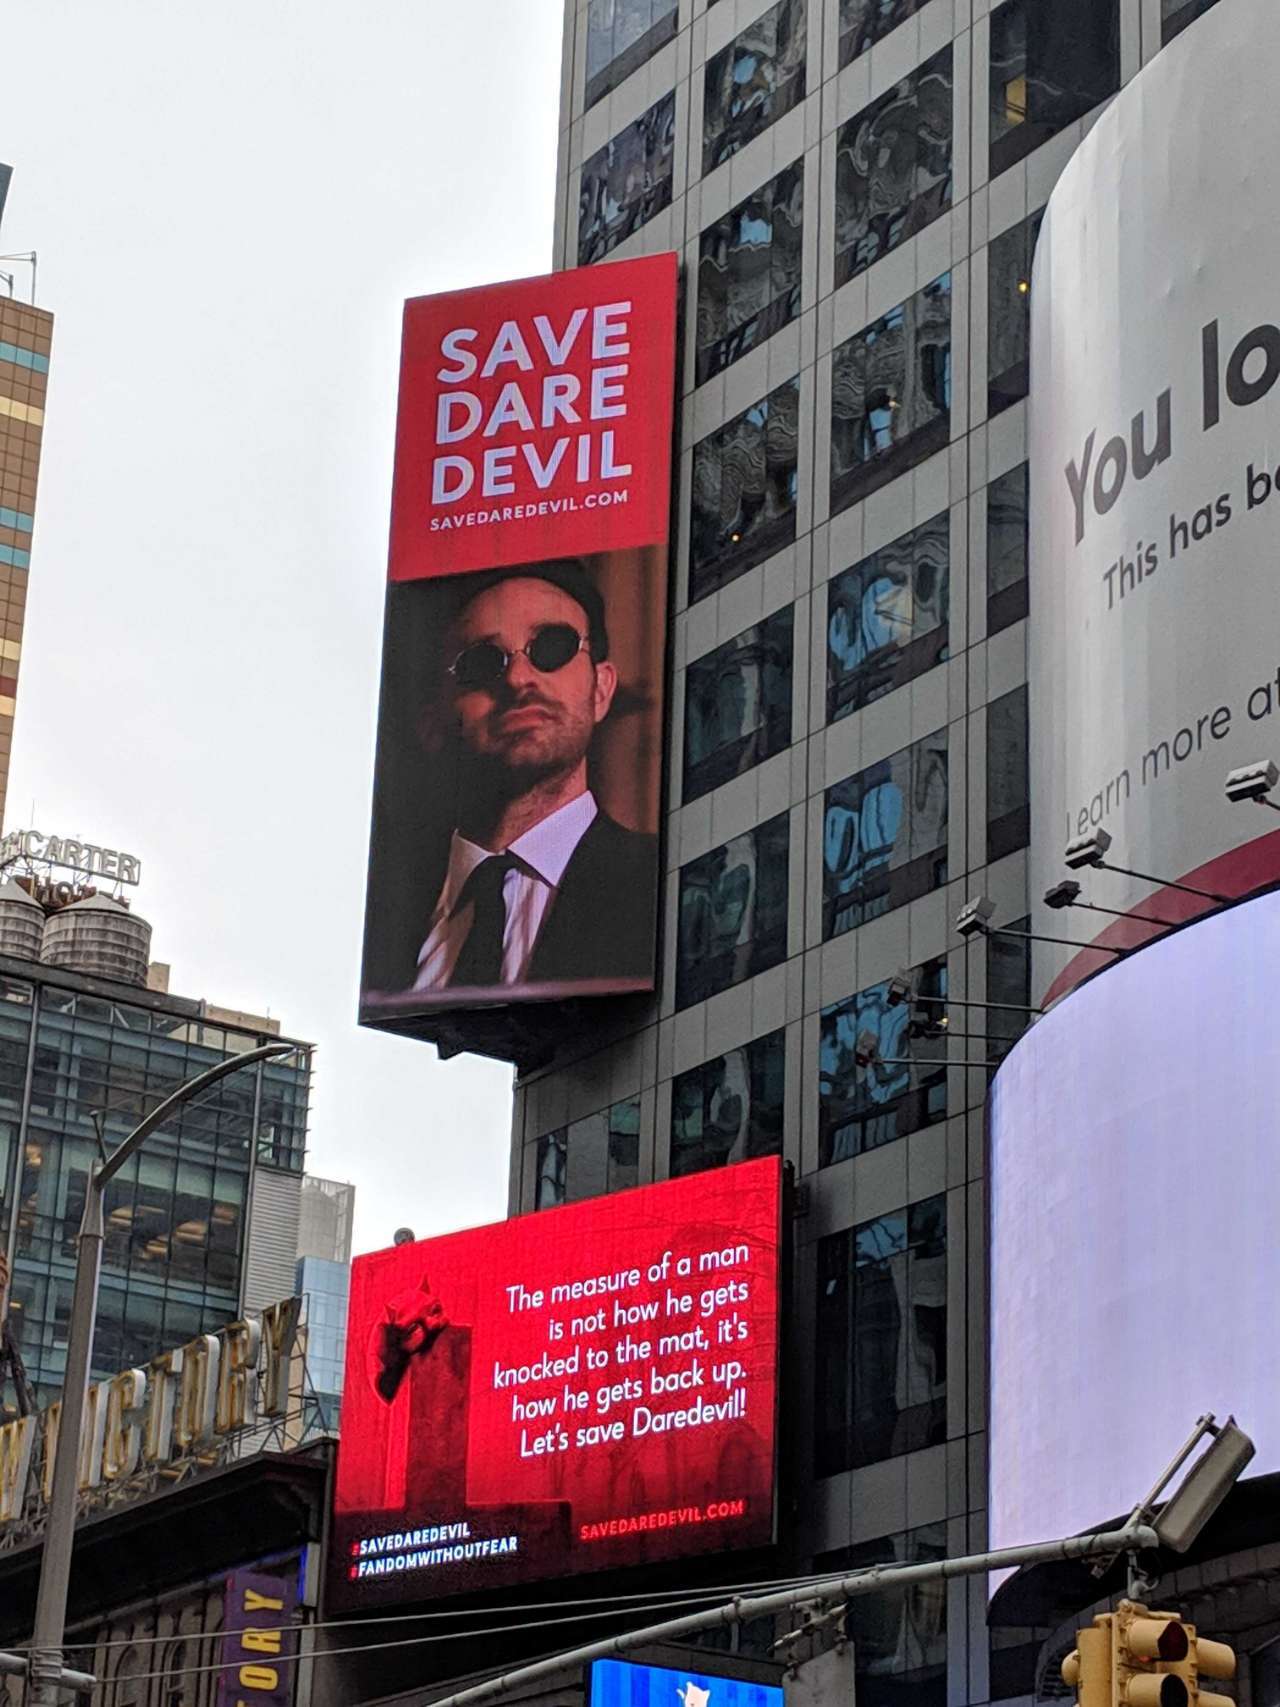 save-daredevil-billboard3-1159866.jpeg